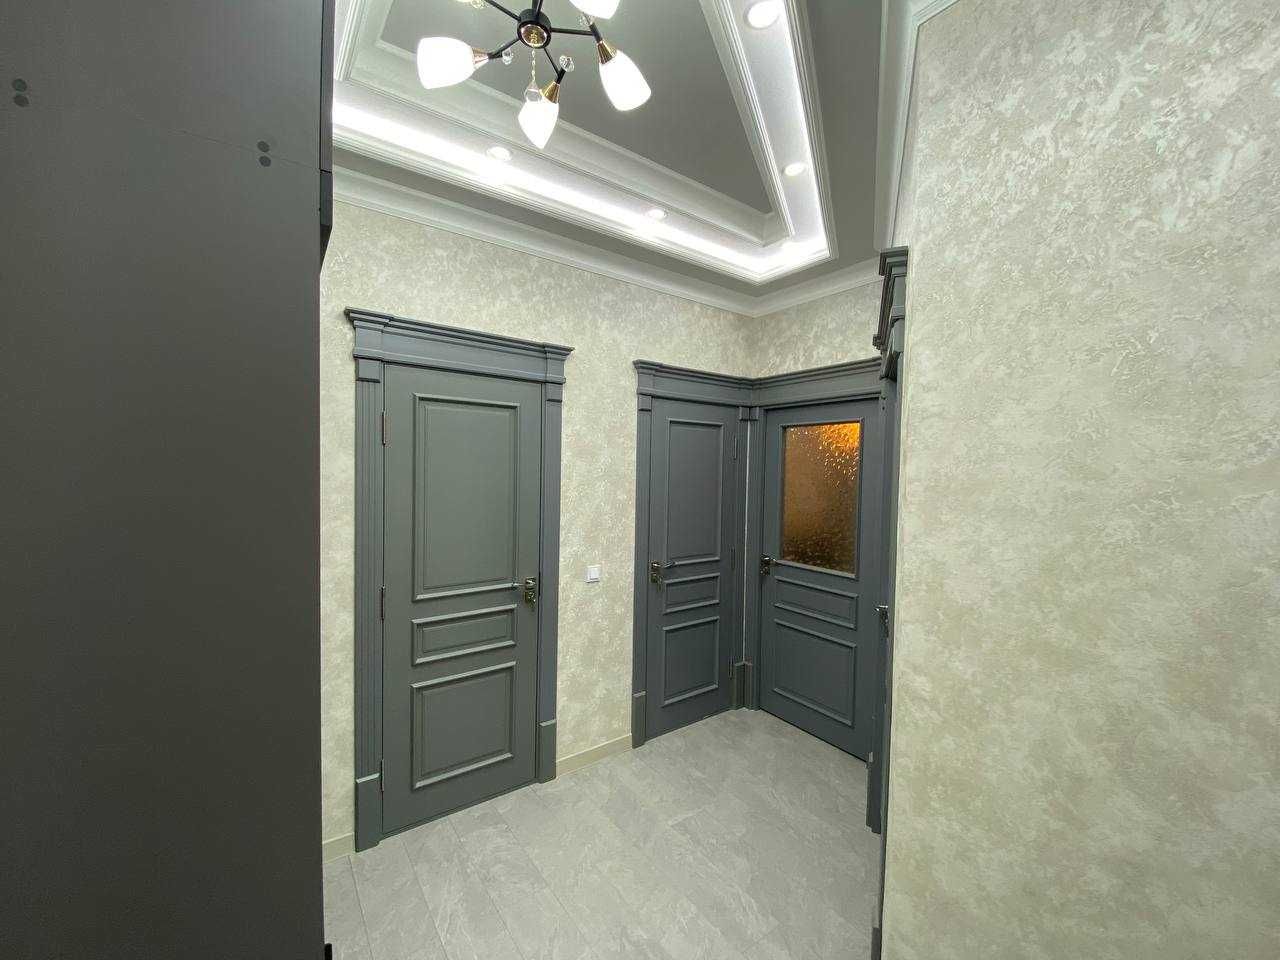 Продаётся 2х комнатная квартира с ремонтом ориентир: Ягона дарча